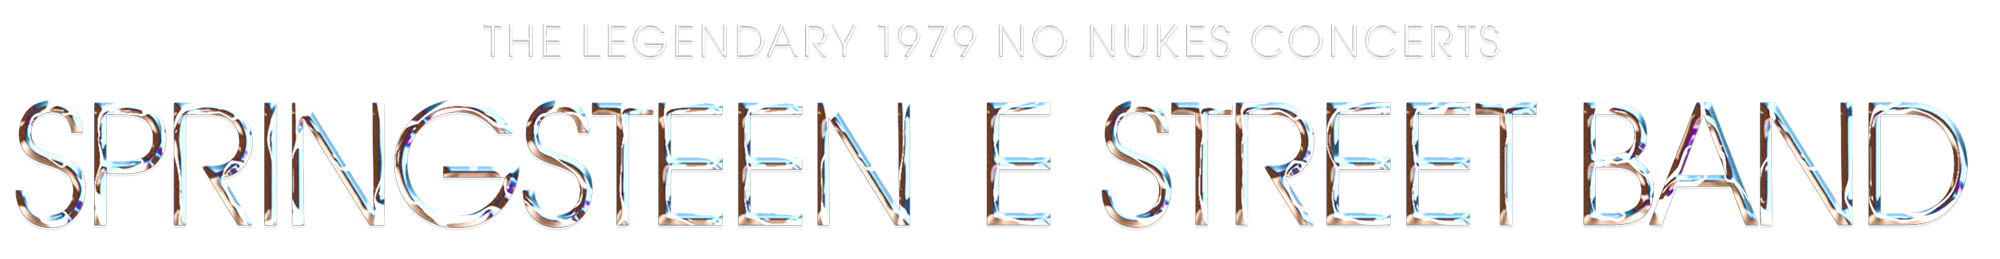 BRUCE SPRINGSTEEN & THE E STREET BAND THE LEGENDARY 1979 NO NUKES CONCERTSブルース･スプリングスティーン＆Eストリート･バンド『ノー･ニュークス･コンサート1979』